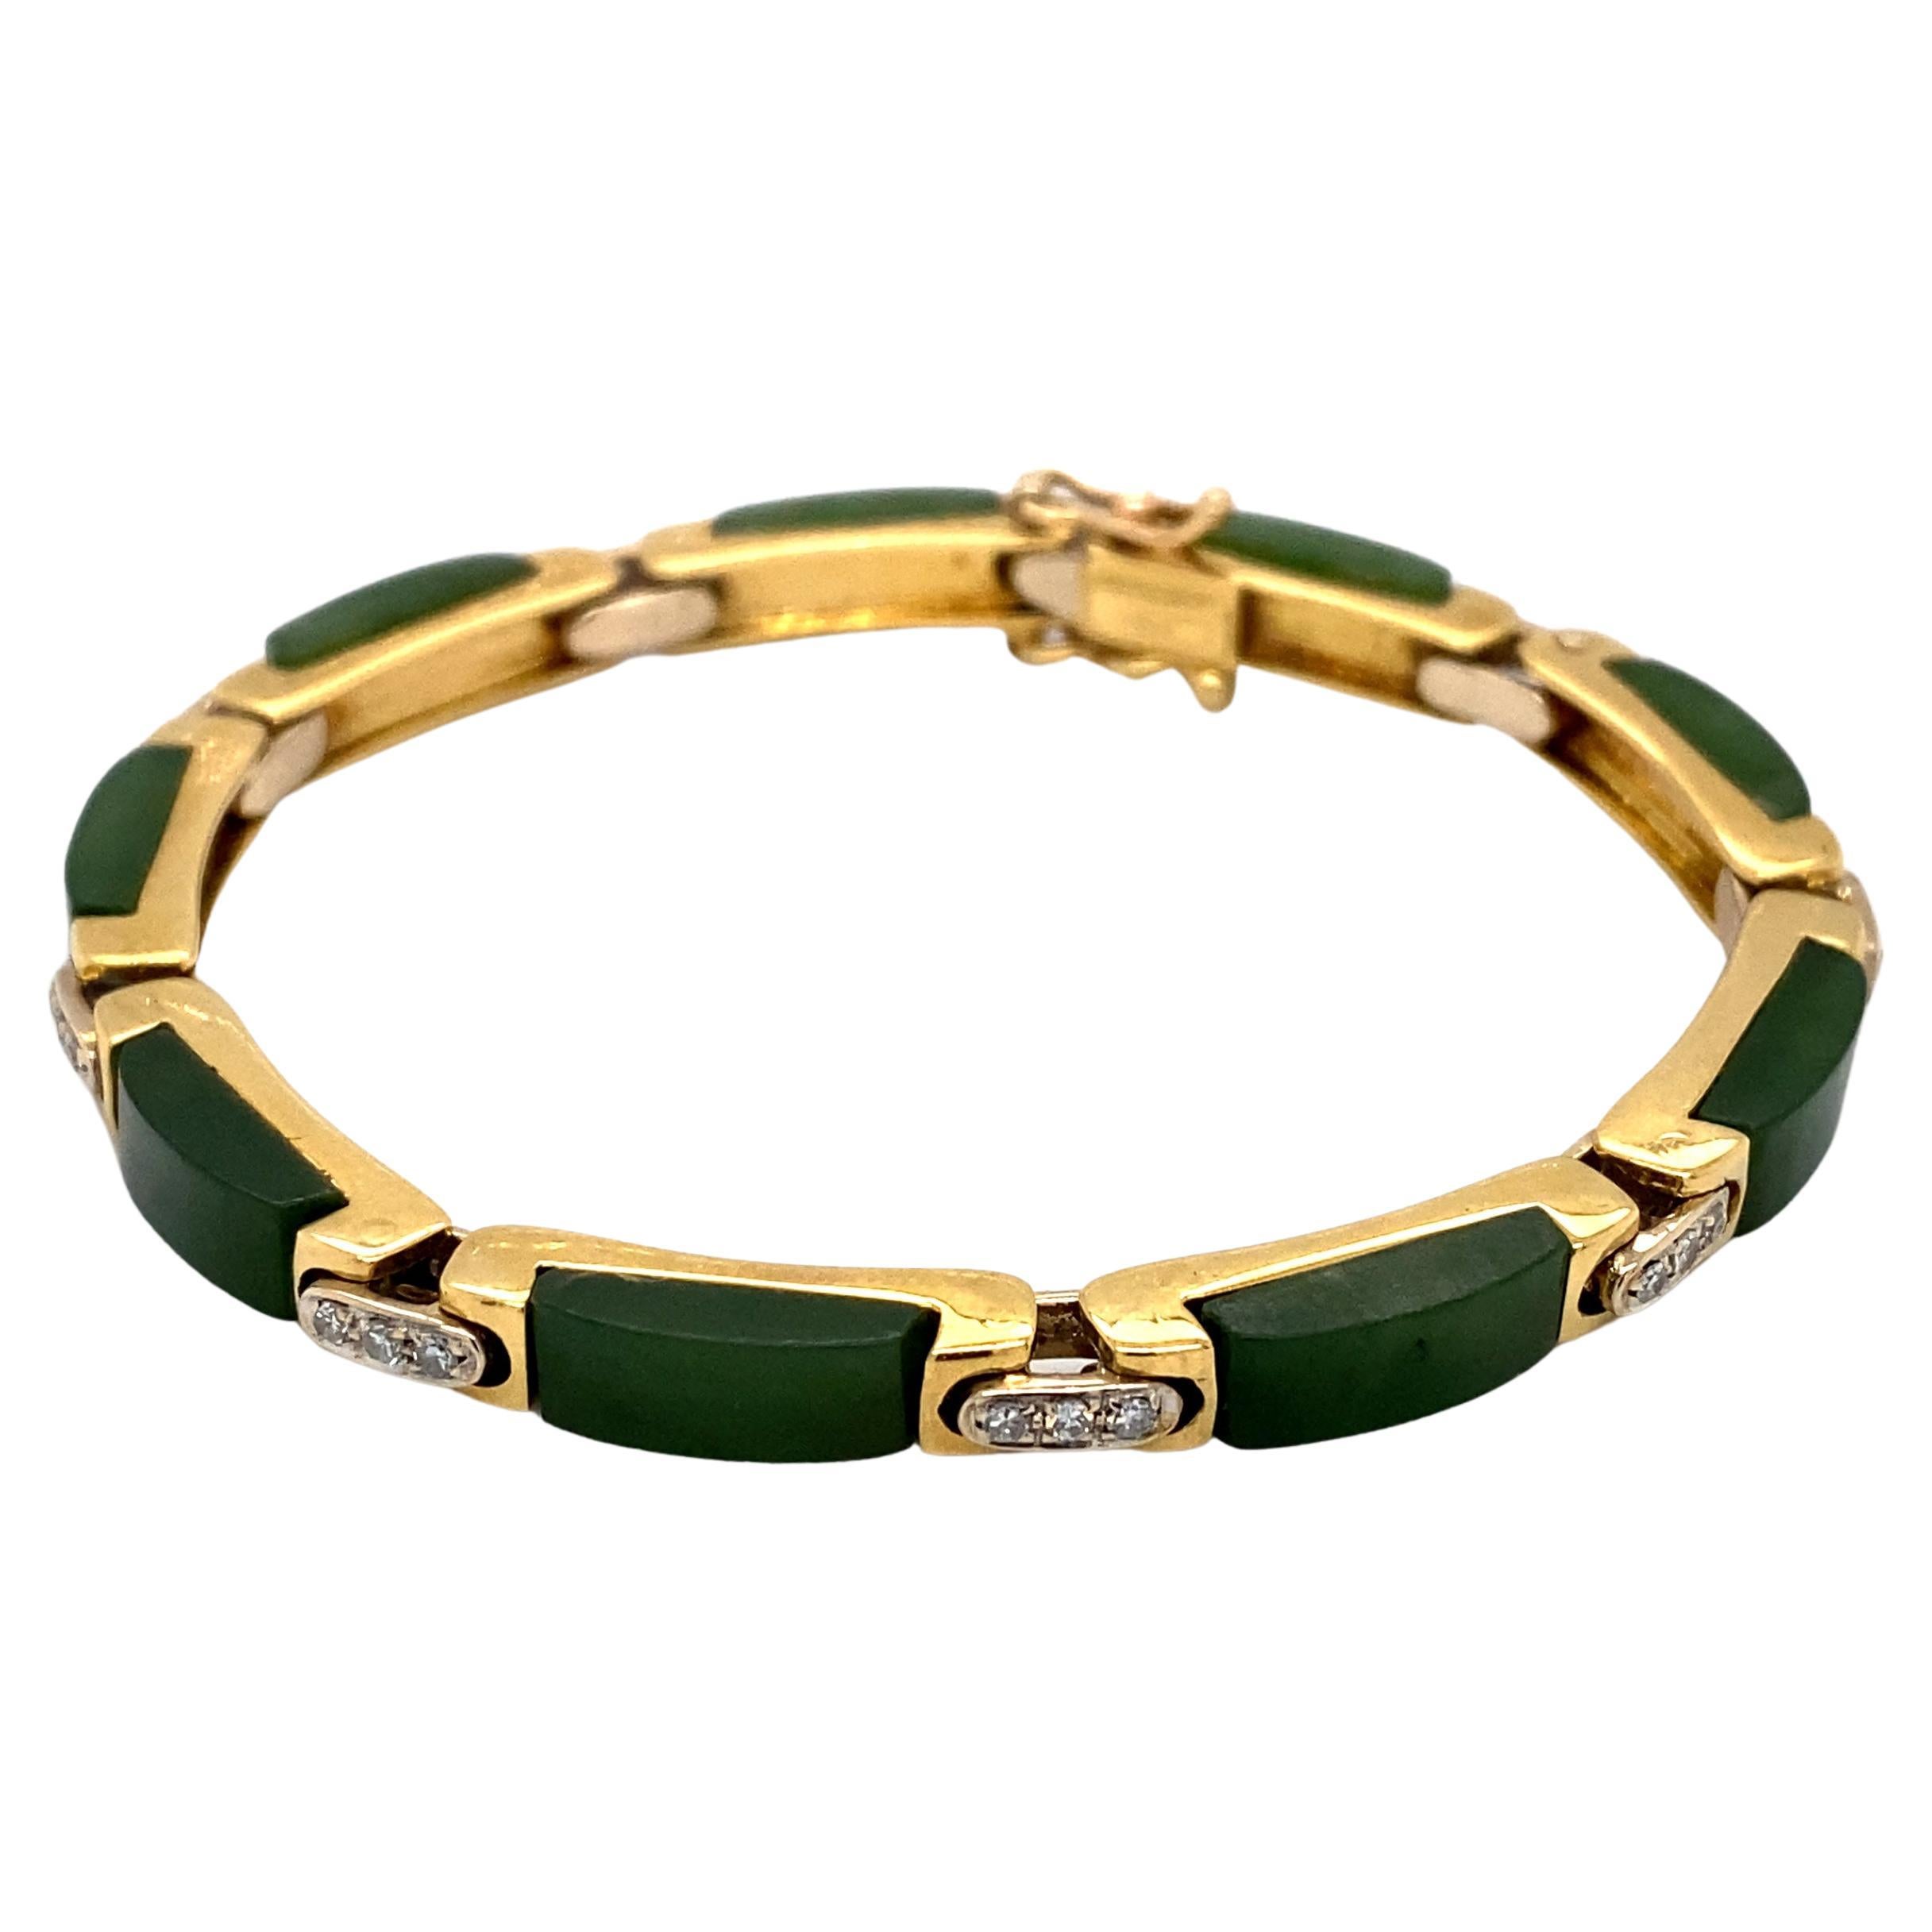 10 Carat Total Jade and Diamond Link Bracelet in 18 Karat Yellow Gold